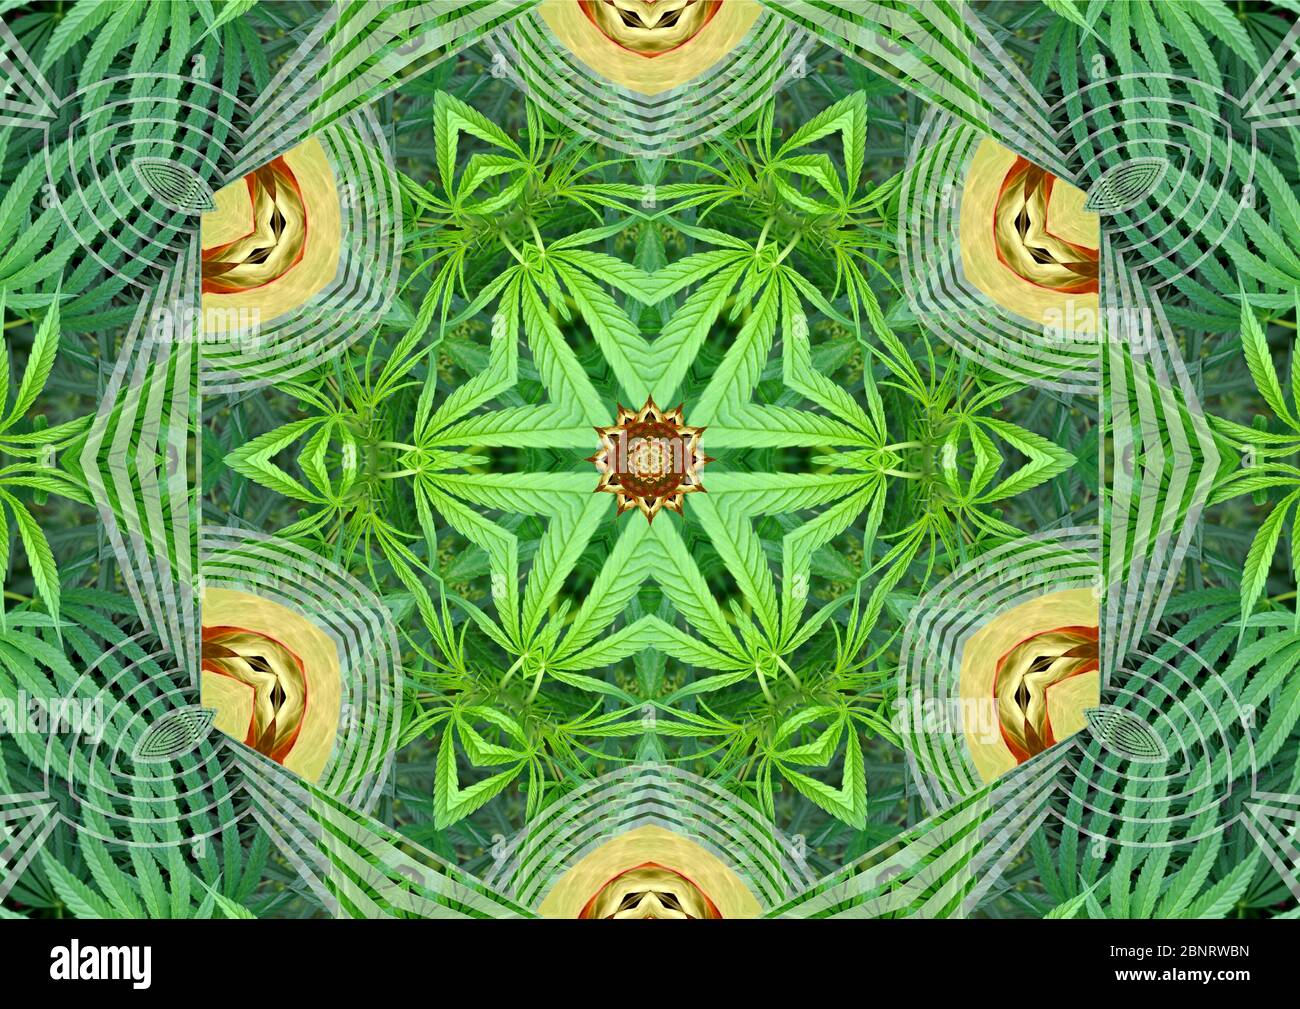 Innovatives Marihuana Mandala - ideales Poster-Design für die besondere Abendsoirée. Stockfoto